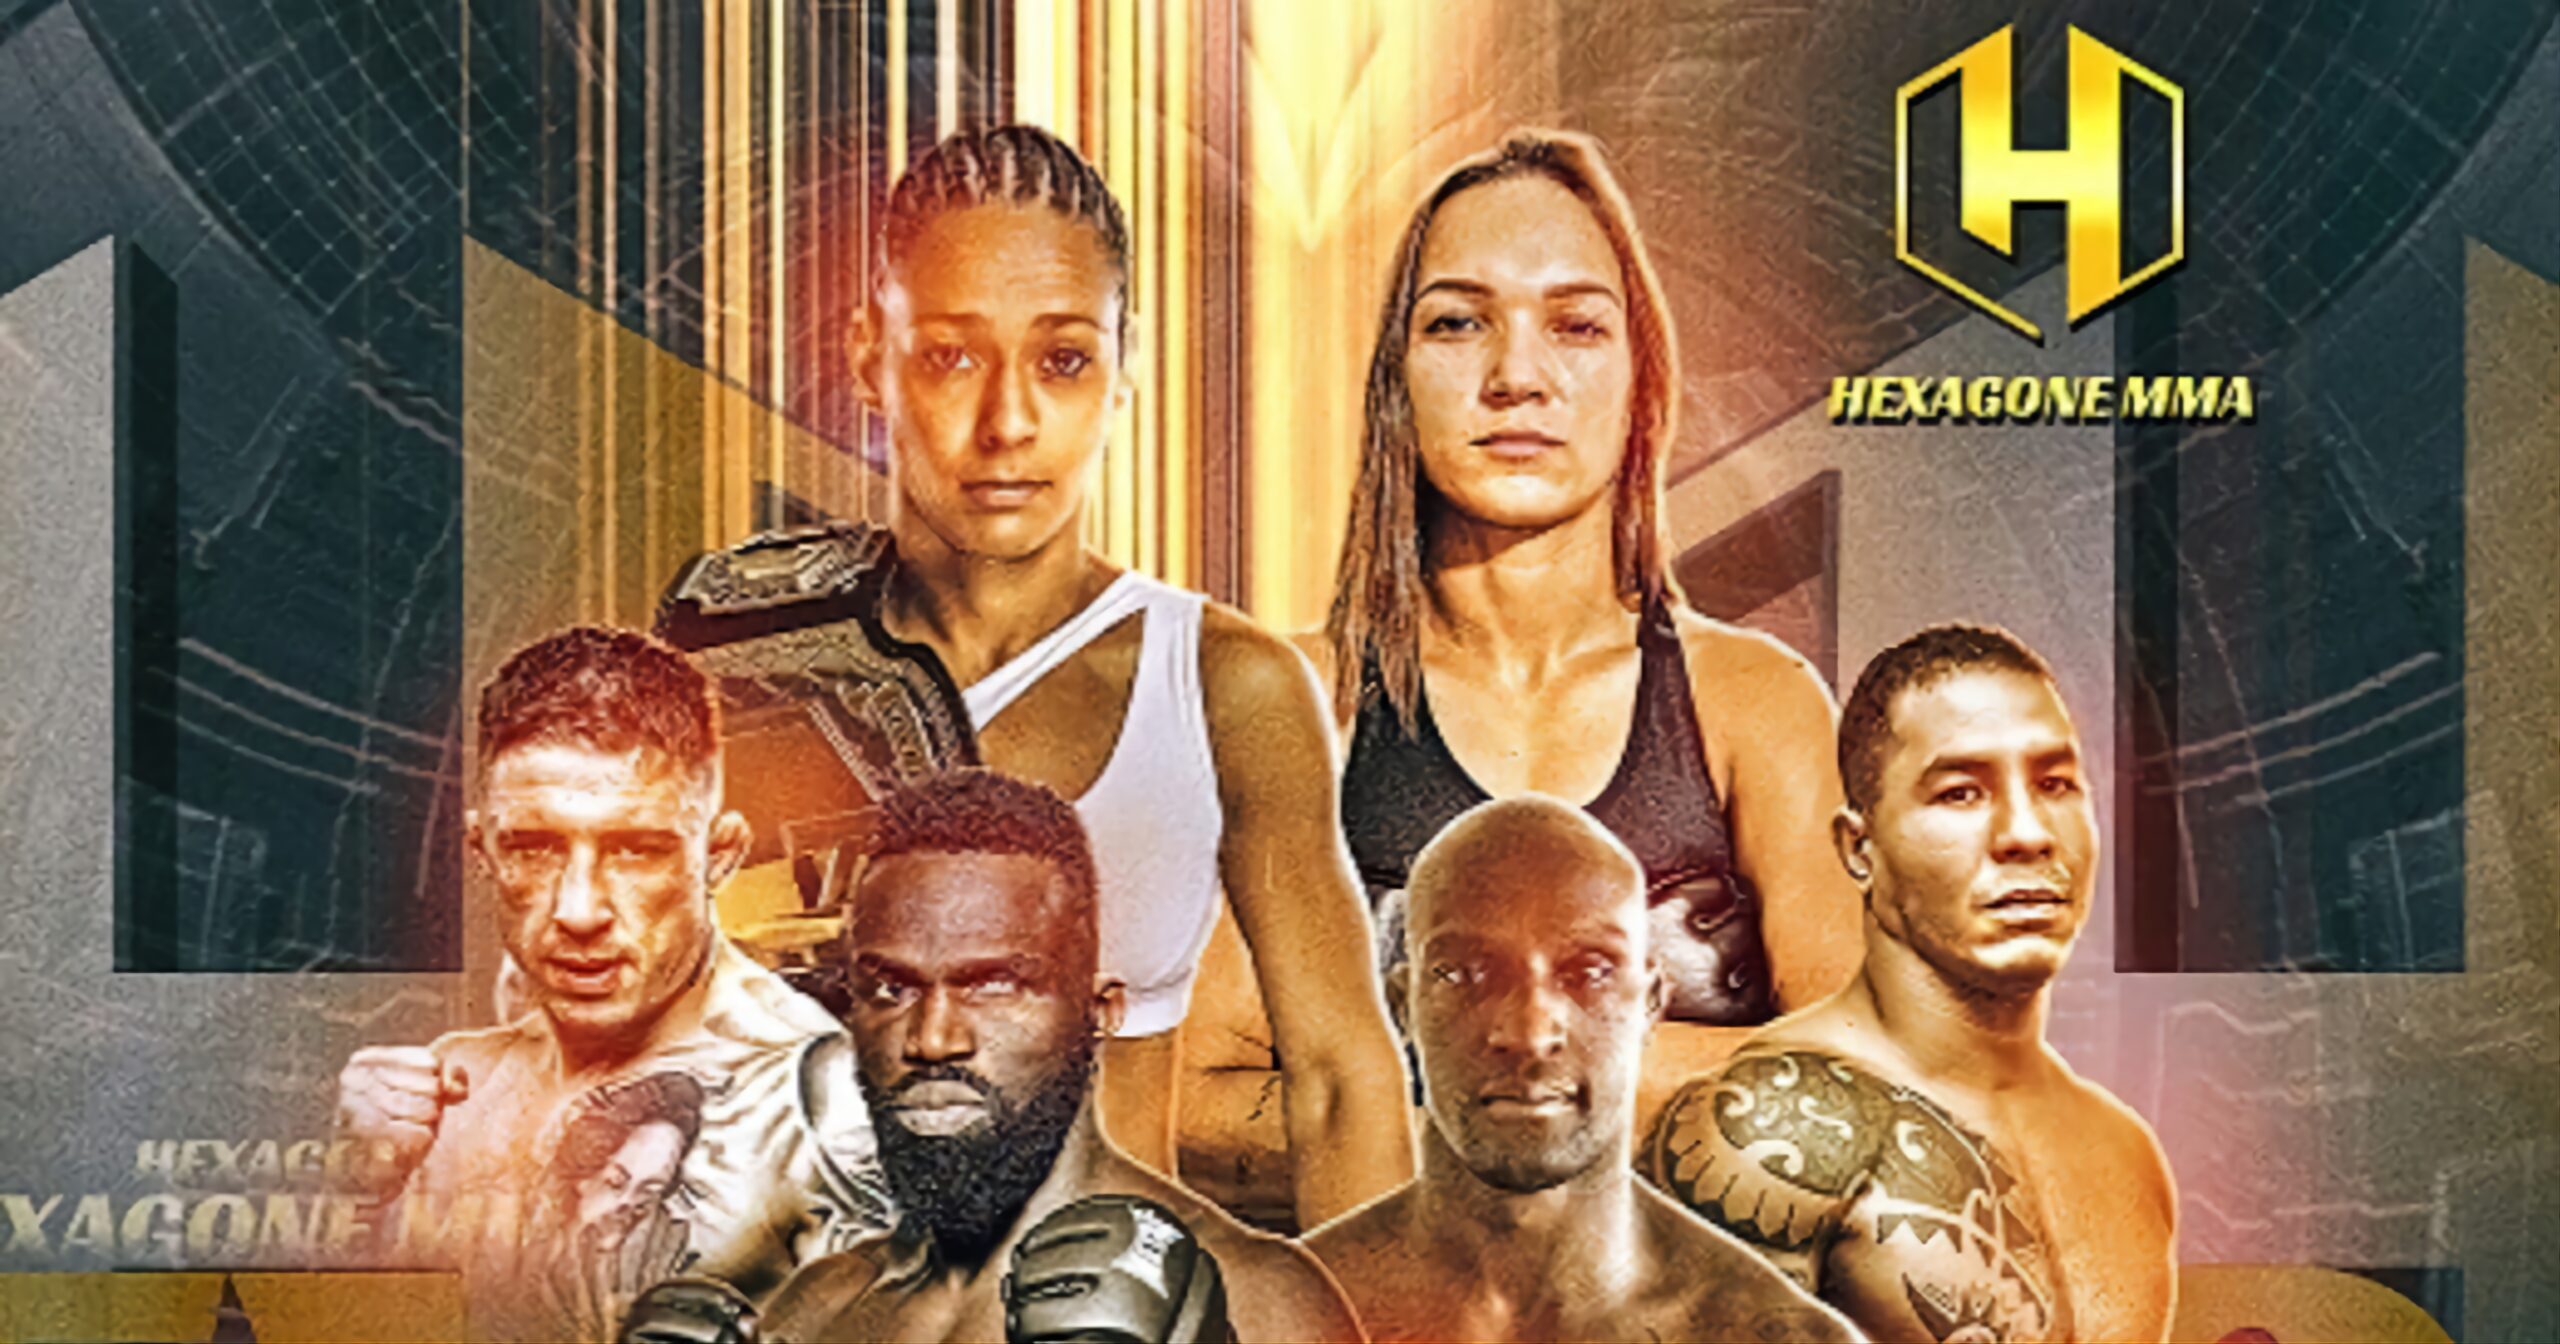 HEXAGONE MMA 7: Fight card updates